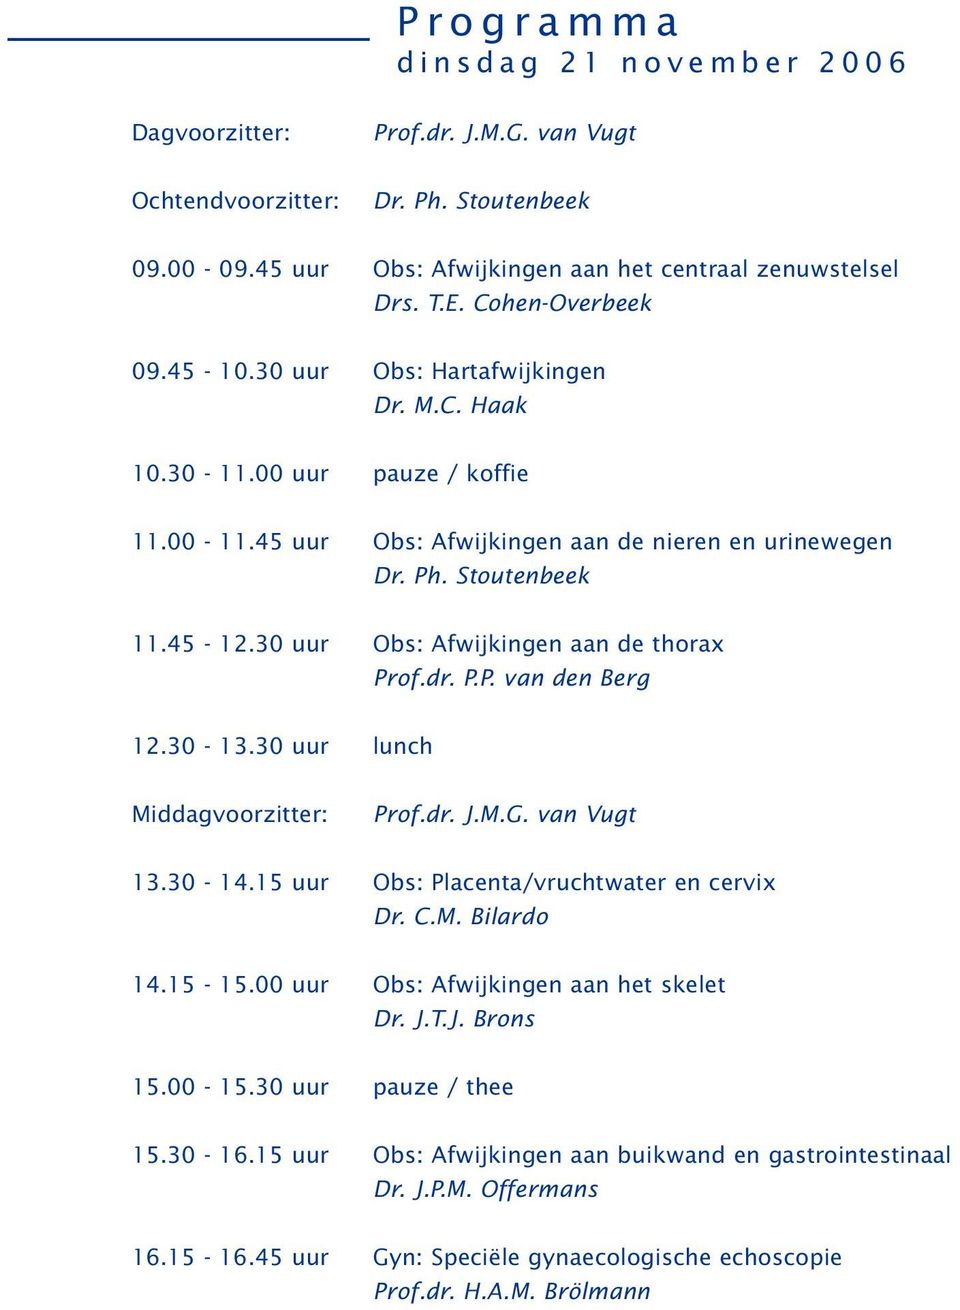 of.dr. P.P. van den Berg 12.30-13.30 uur lunch Middagvoorzitter: Prof.dr. J.M.G. van Vugt 13.30-14.15 uur Obs: Placenta/vruchtwater en cervix Dr. C.M. Bilardo 14.15-15.